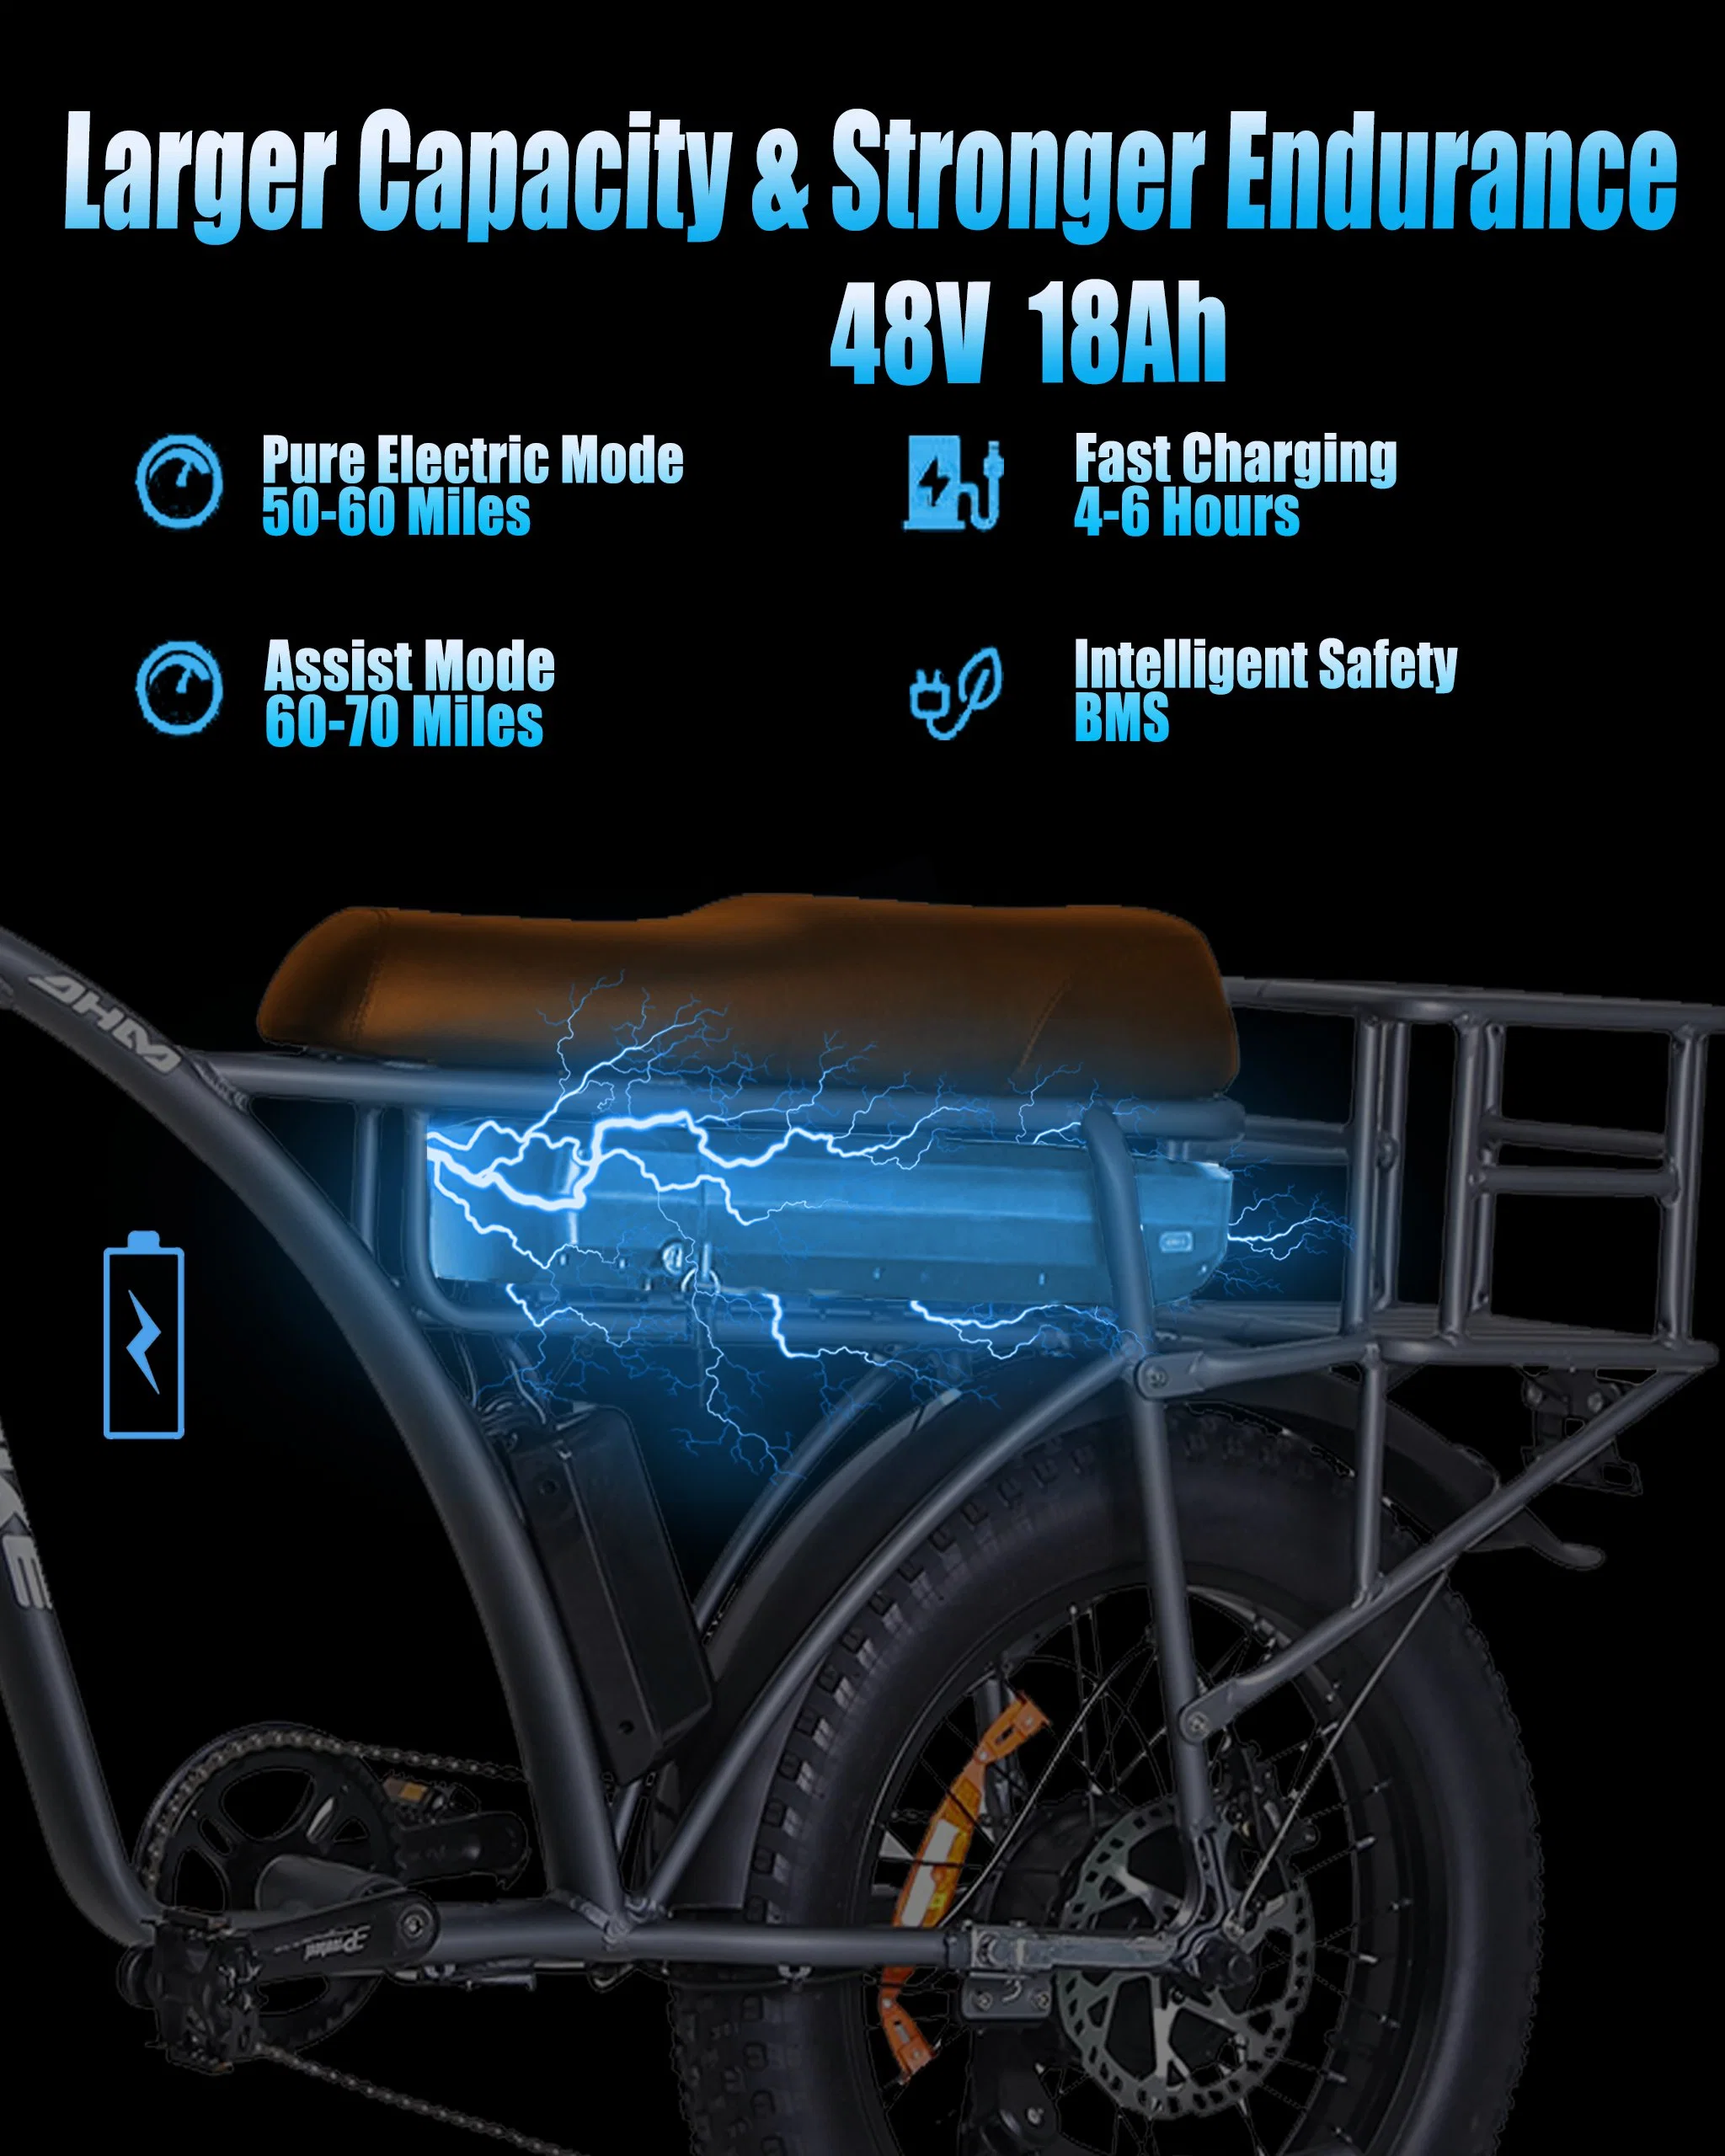 Pneu de gordura Retro Electric Bike de 1000 W e 48 V entrega rápida Moto de terra e elétrica de longo alcance de 7 velocidades todo-o-terreno